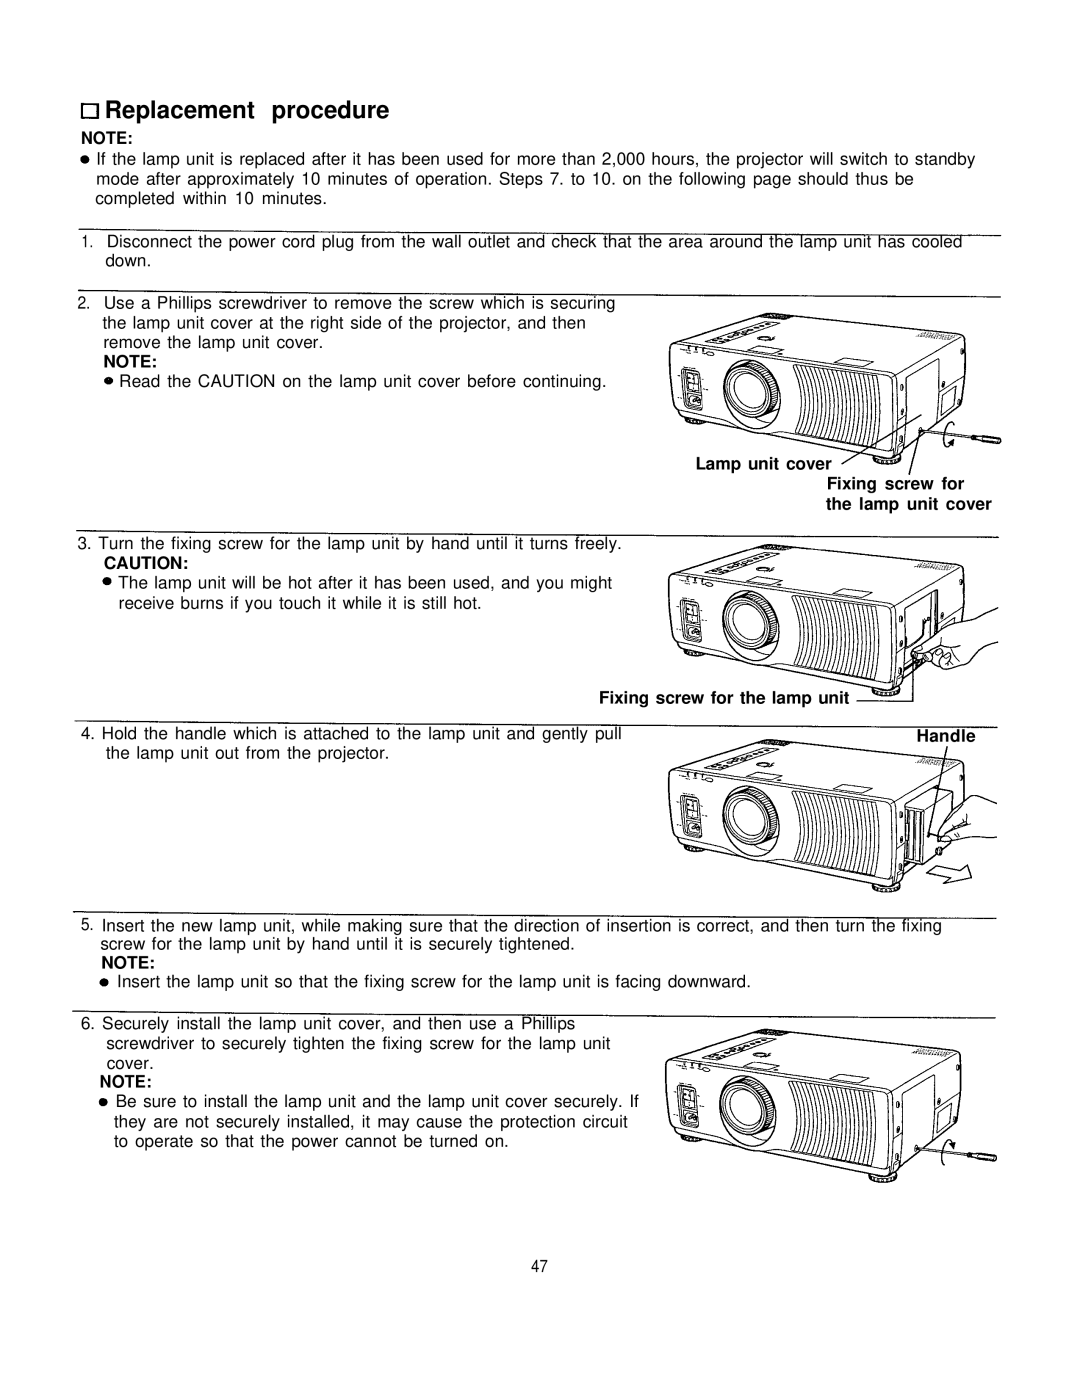 Panasonic PT-L795U manual Replacement procedure, Lamp unit cover Fixing screw for the lamp unit cover, Handle 